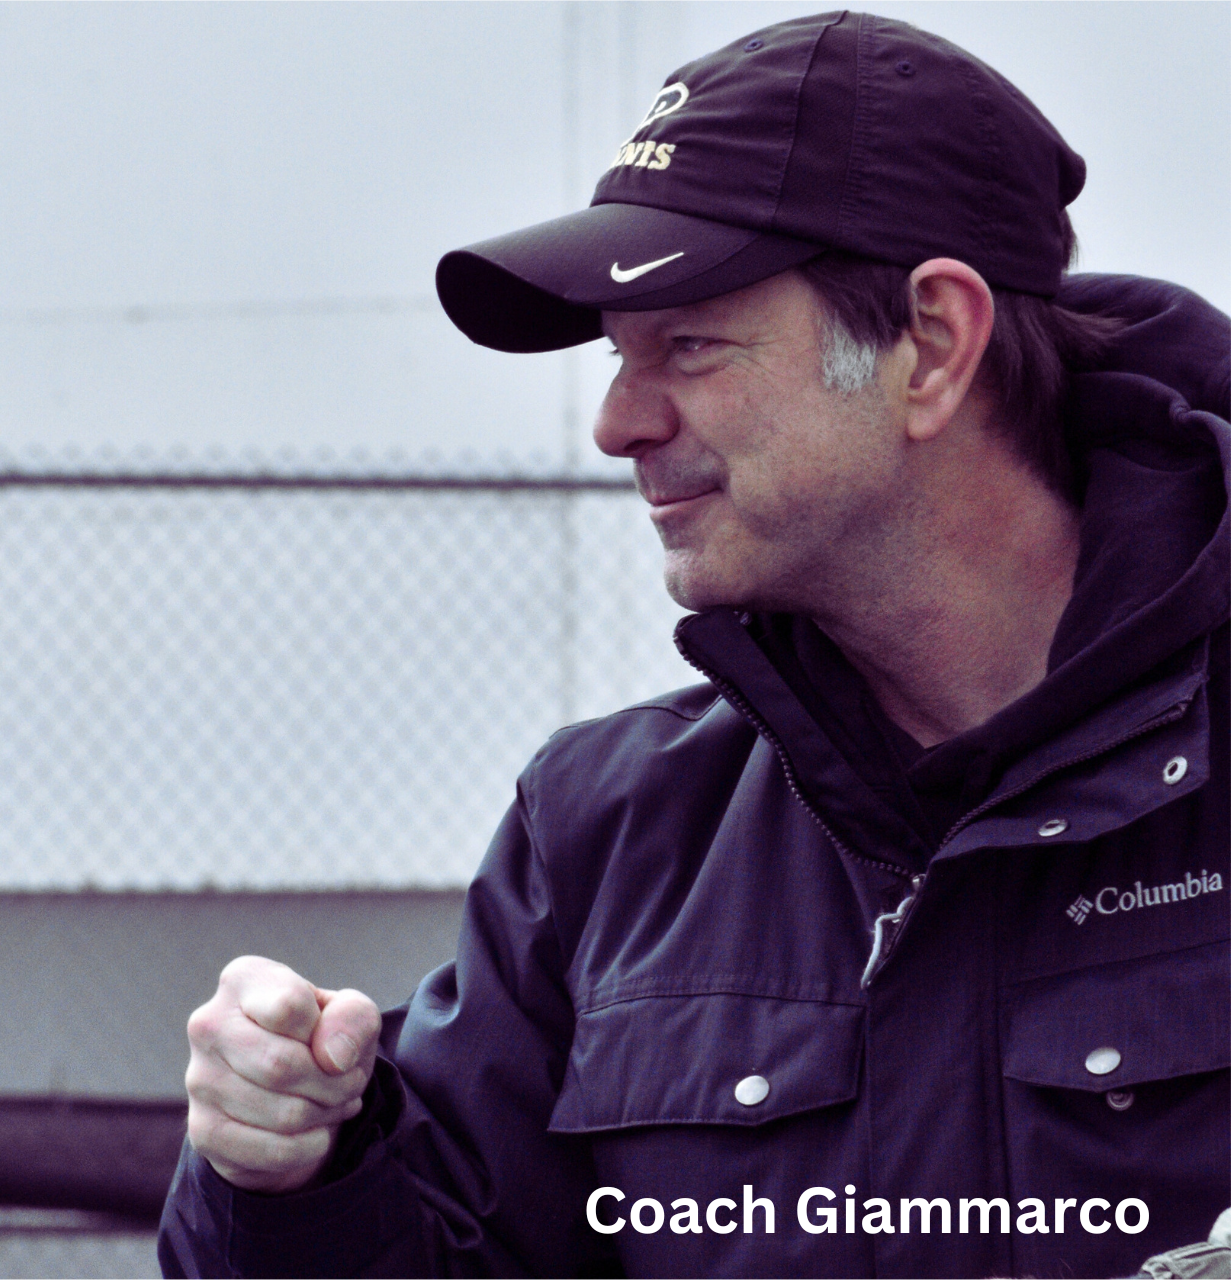 Tennis Mental Performance Coach Patrick Giammarco